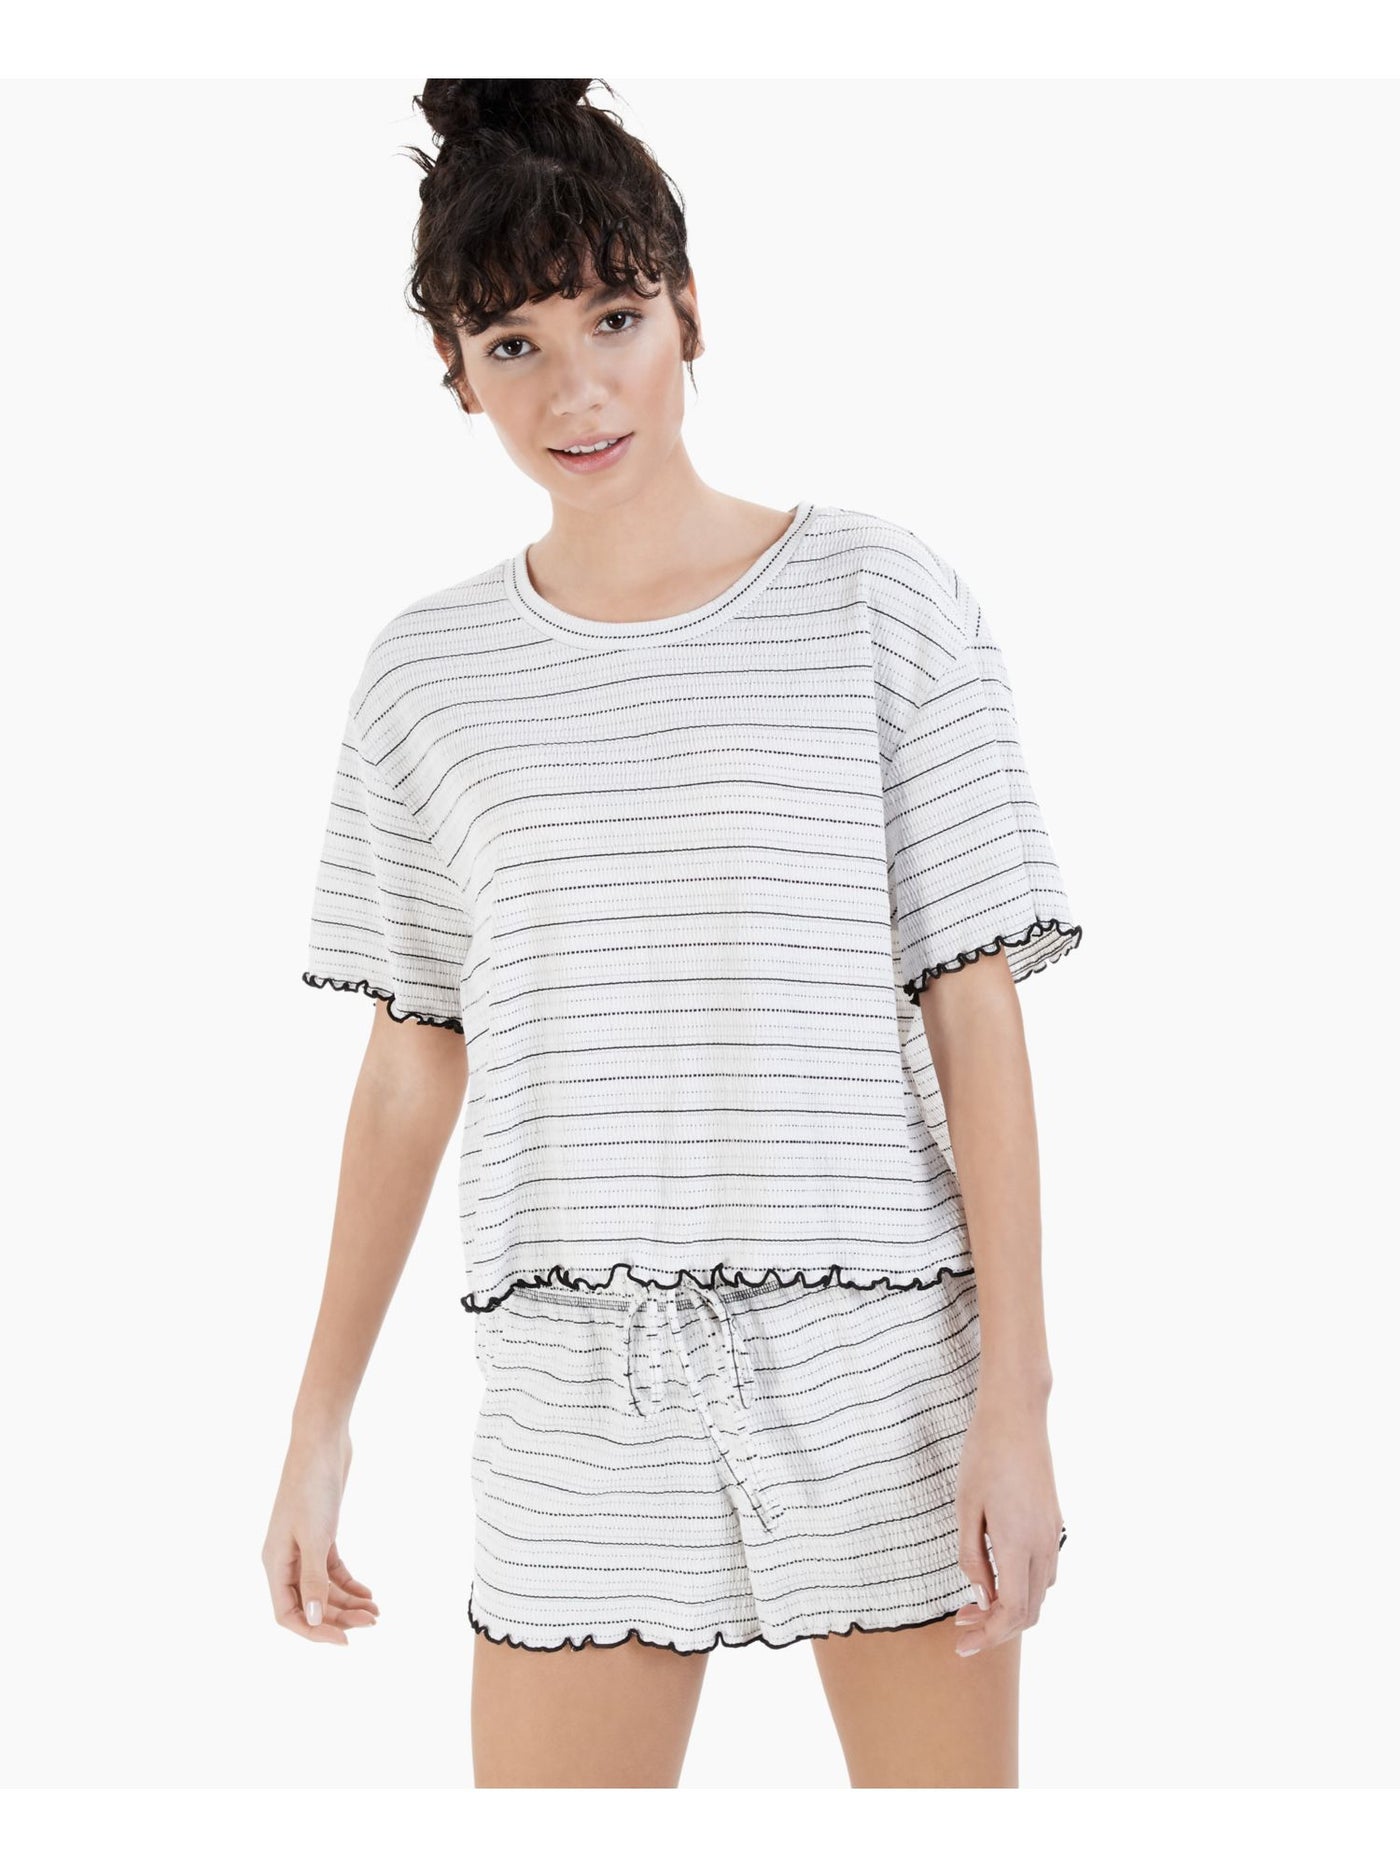 JENNI Womens White Striped Textured Short Sleeve T-Shirt Top and Shorts Pajamas S